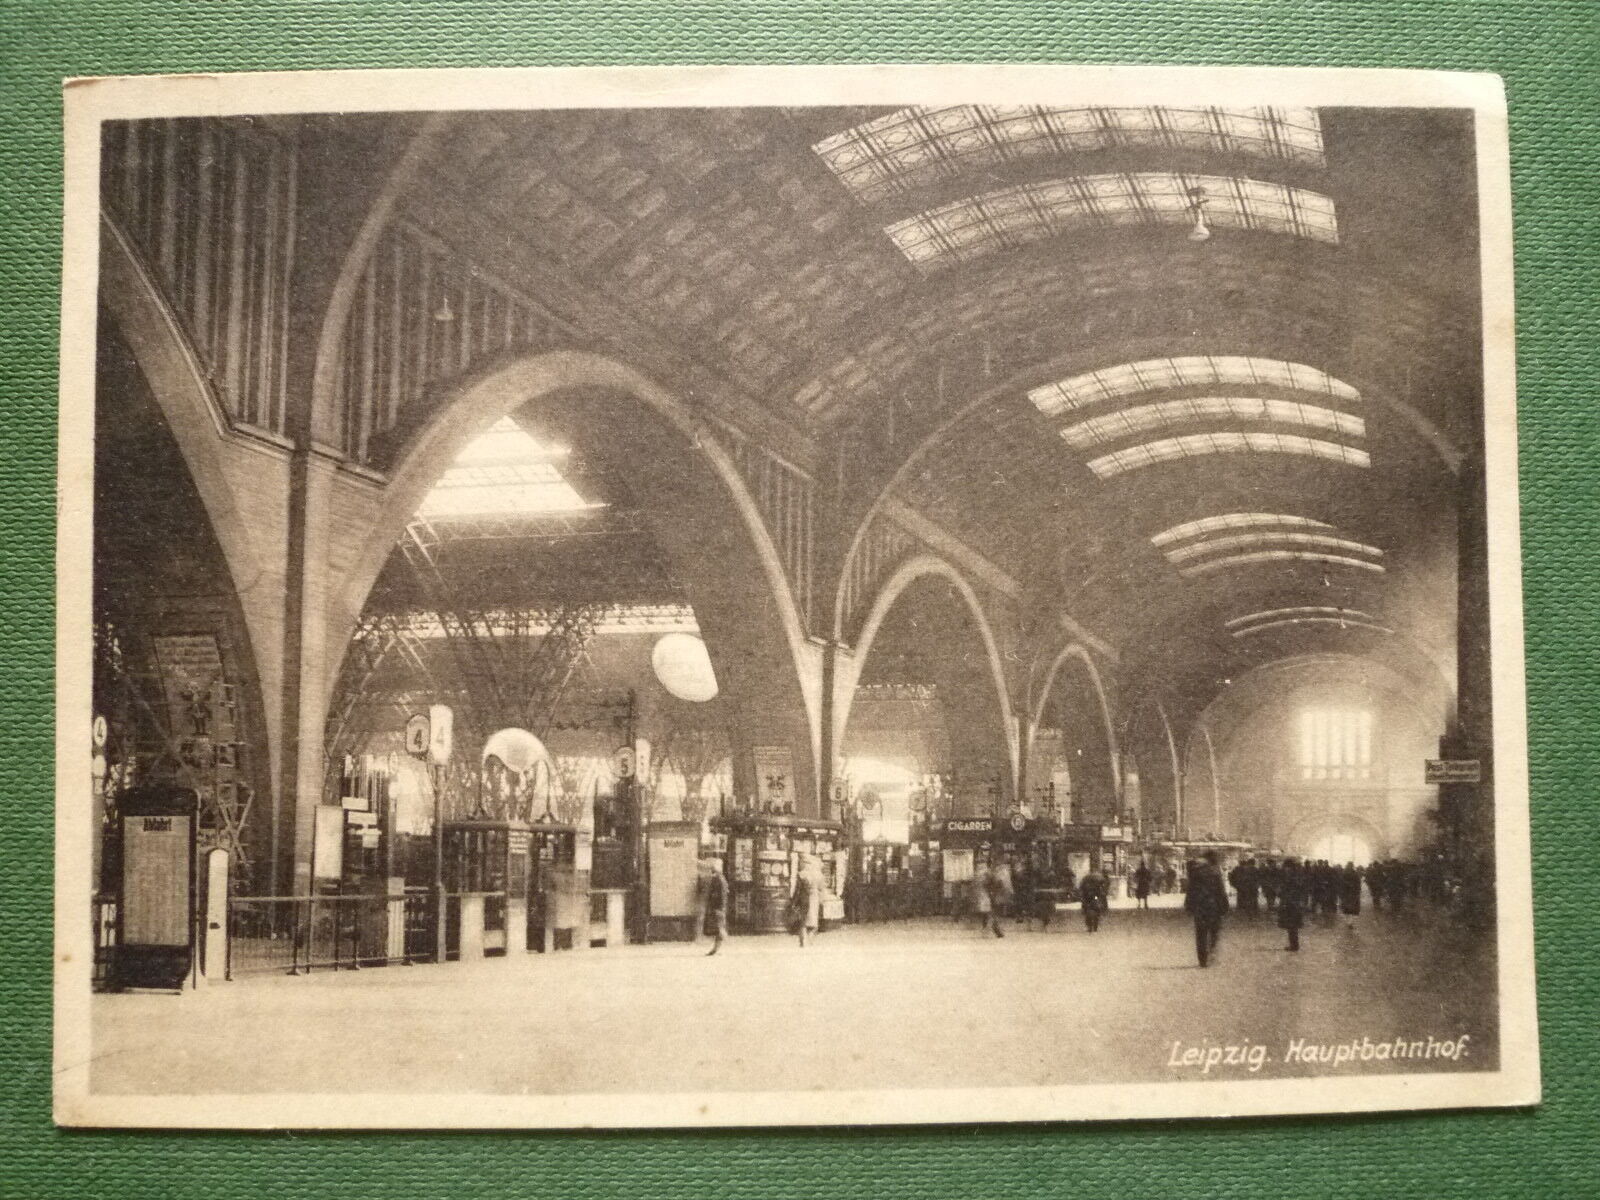 Ak Leipzig, Main Railway Station,Interior,Interior View,Postal Not Used